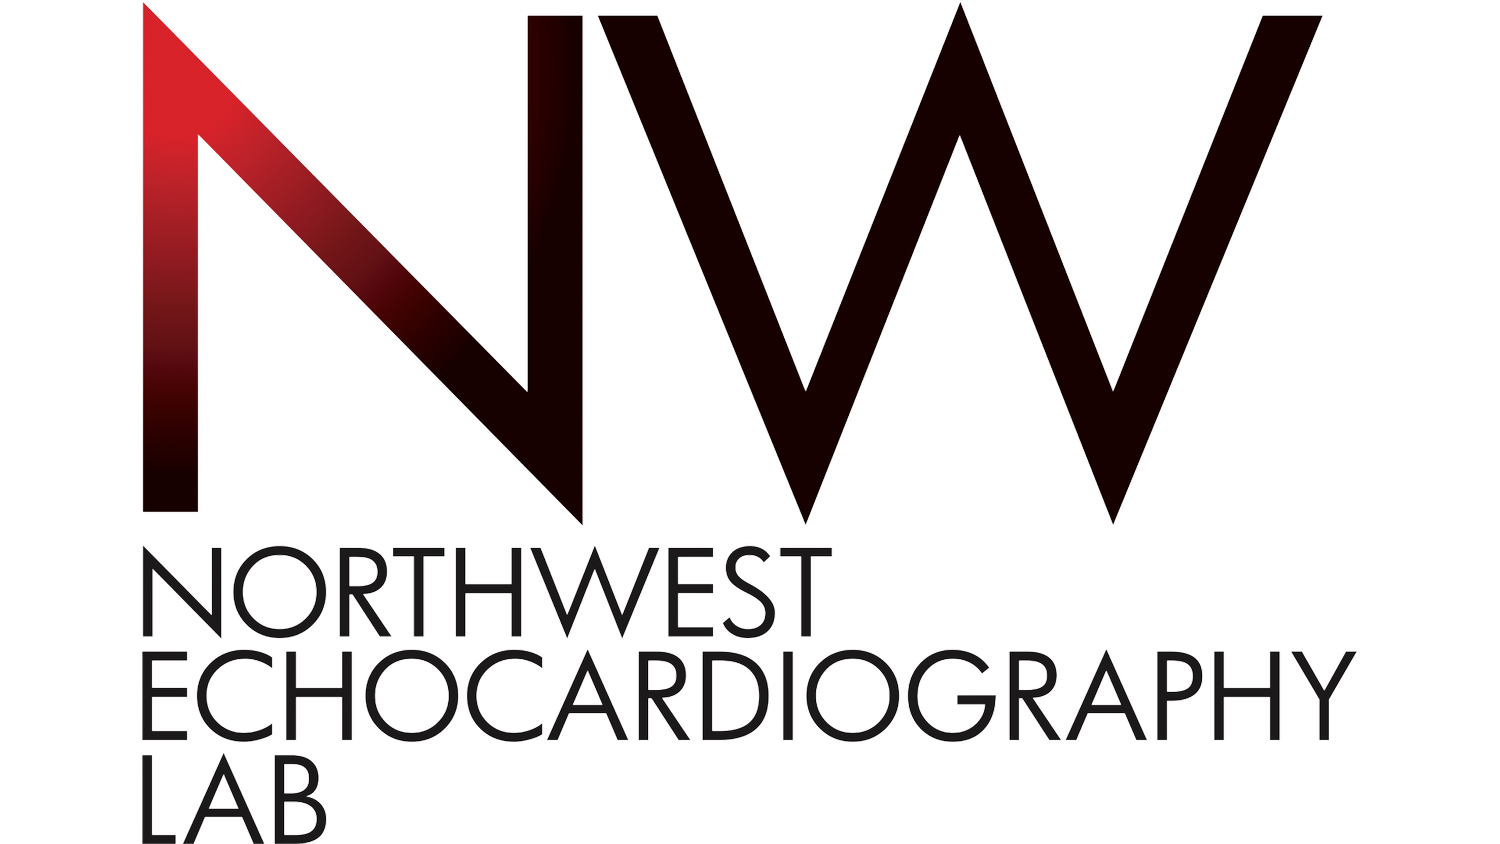 Northwest Echocardiography Lab